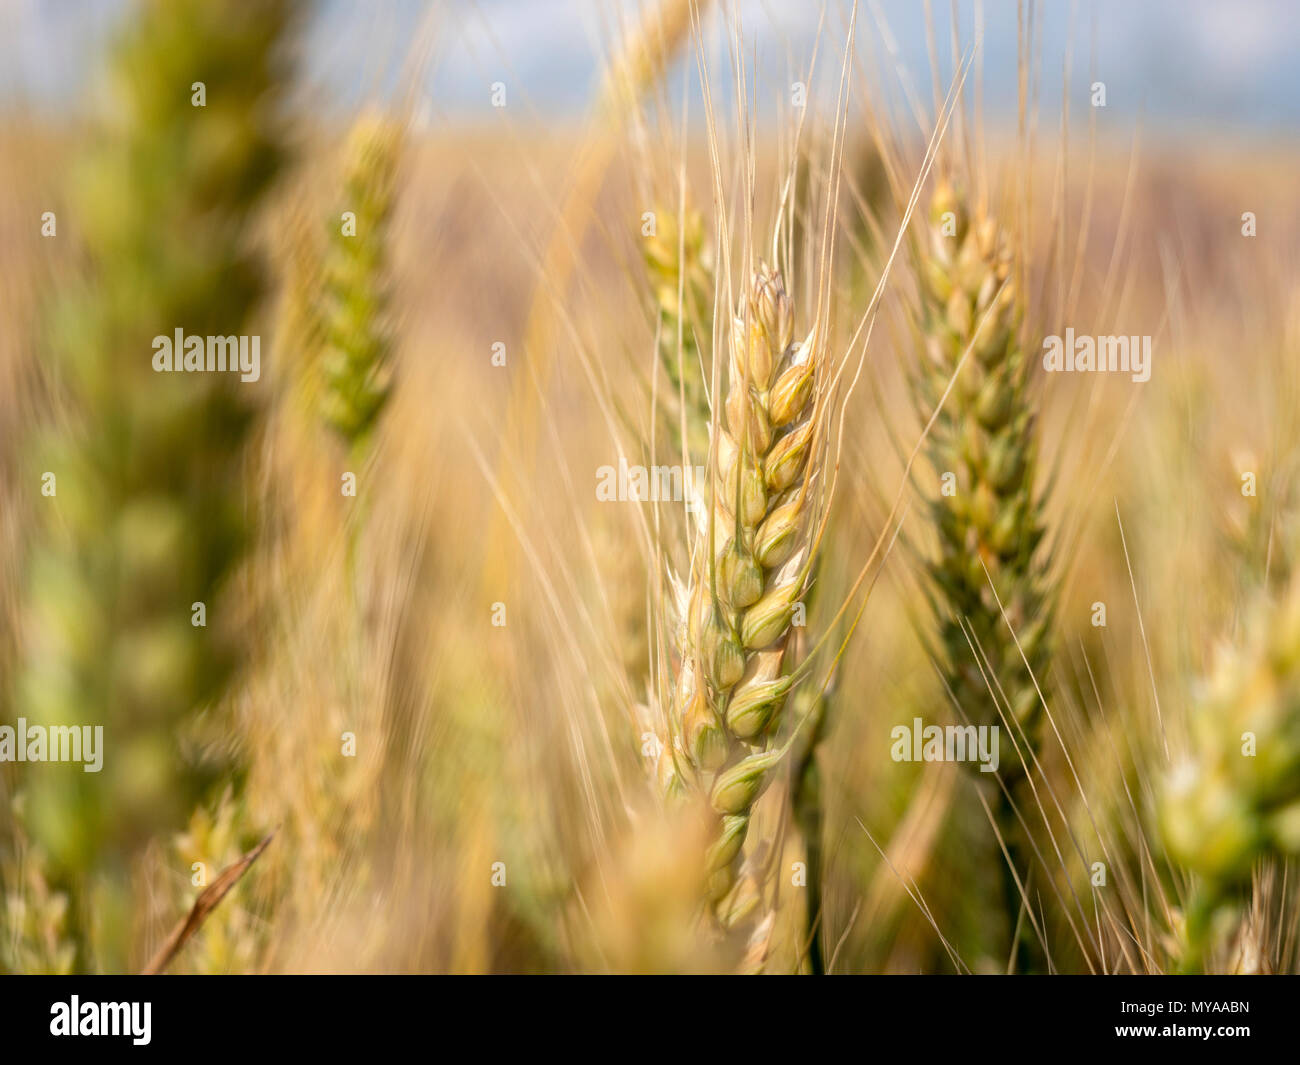 Wheat filed close up shot Stock Photo